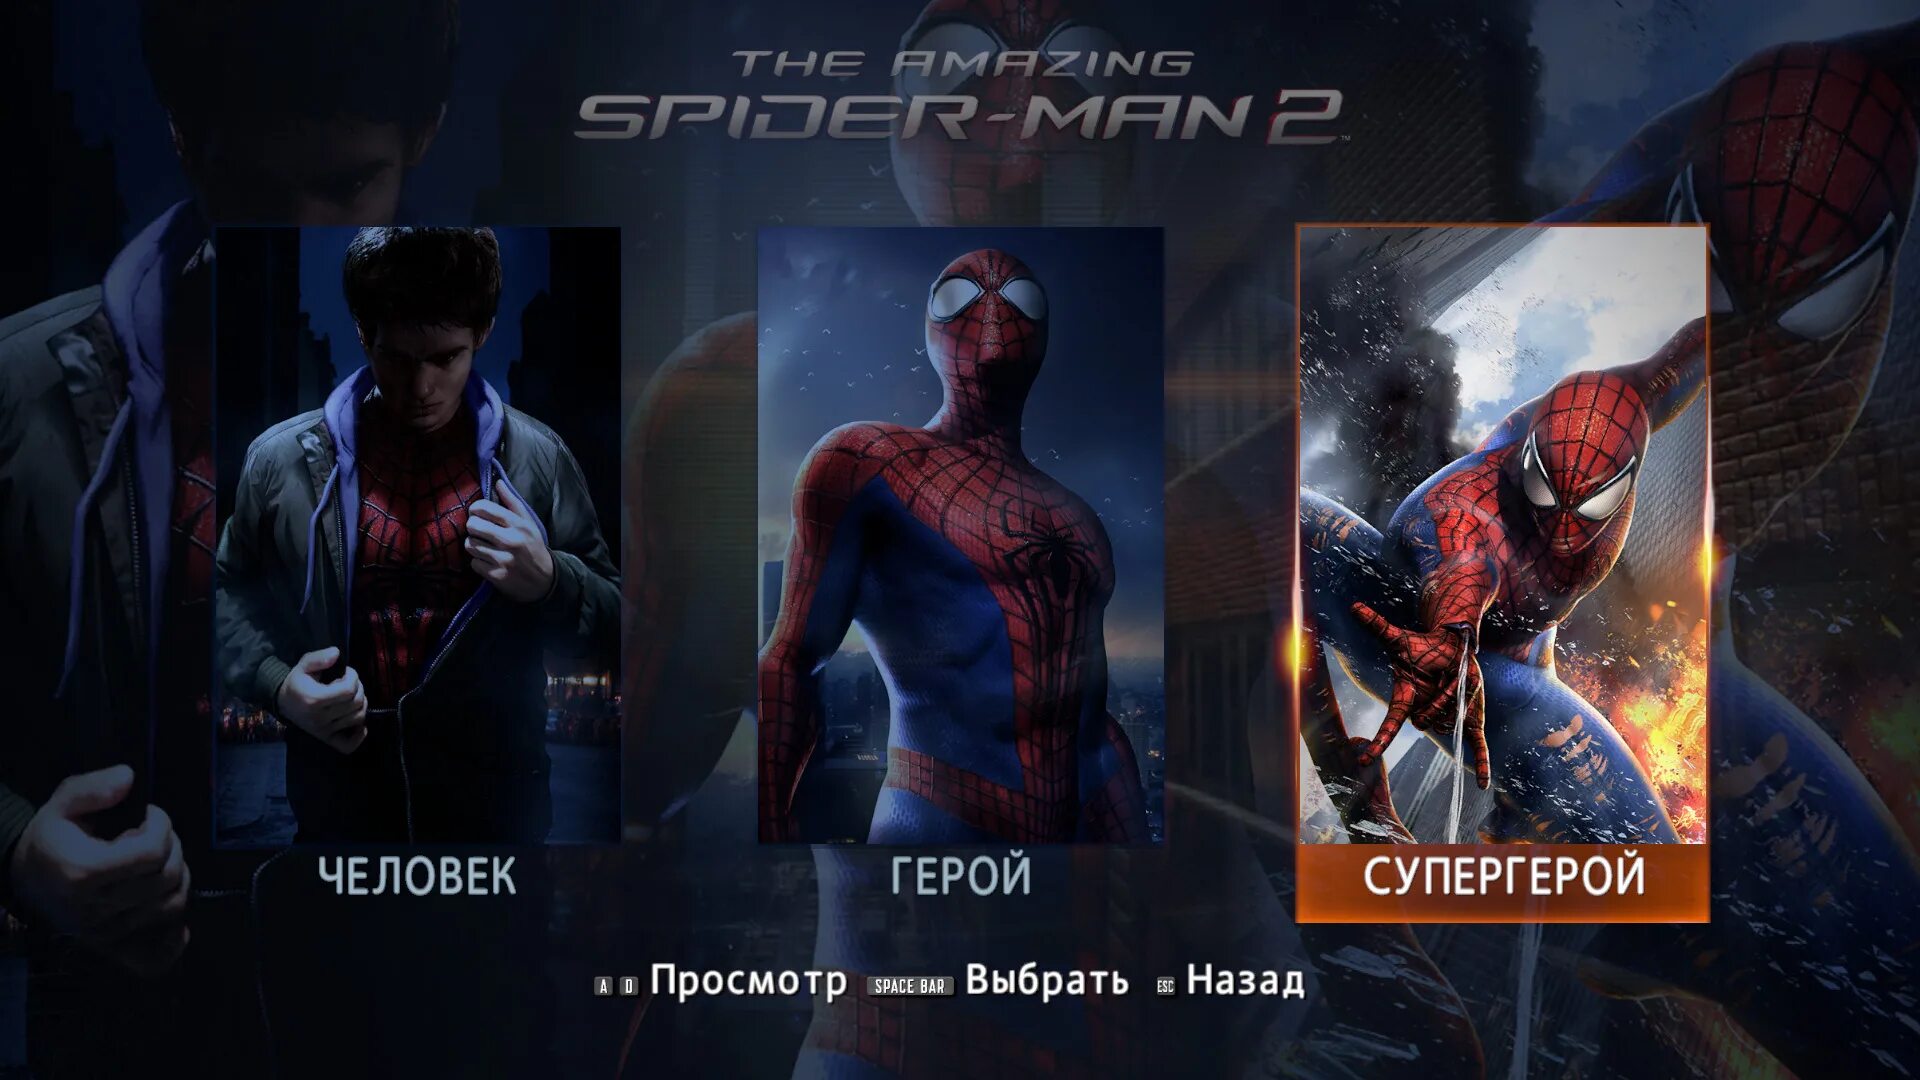 Бесплатная игра человек паук 2. The amazing Spider-man 2 (игра, 2014). Человек паук эмейзинг 2 игра. Новый человек паук 2 игра. Человек паук амазинг игра.